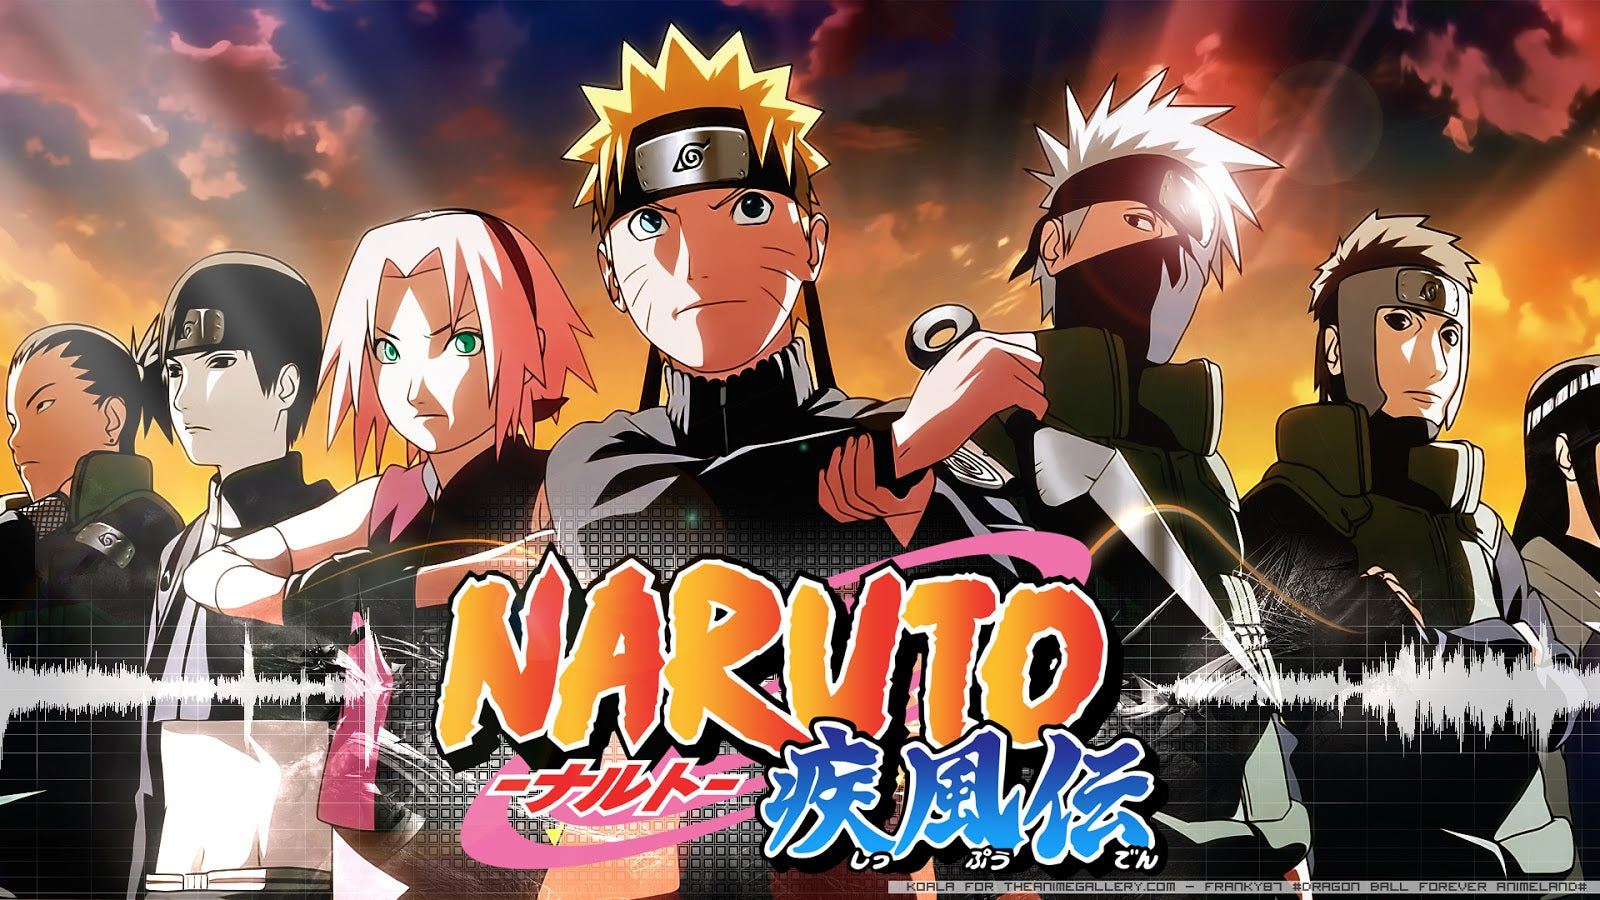 Naruto Shippuden Episodes 243 - 295 English Dubbed / Japanese Seasons 12-13  DVD